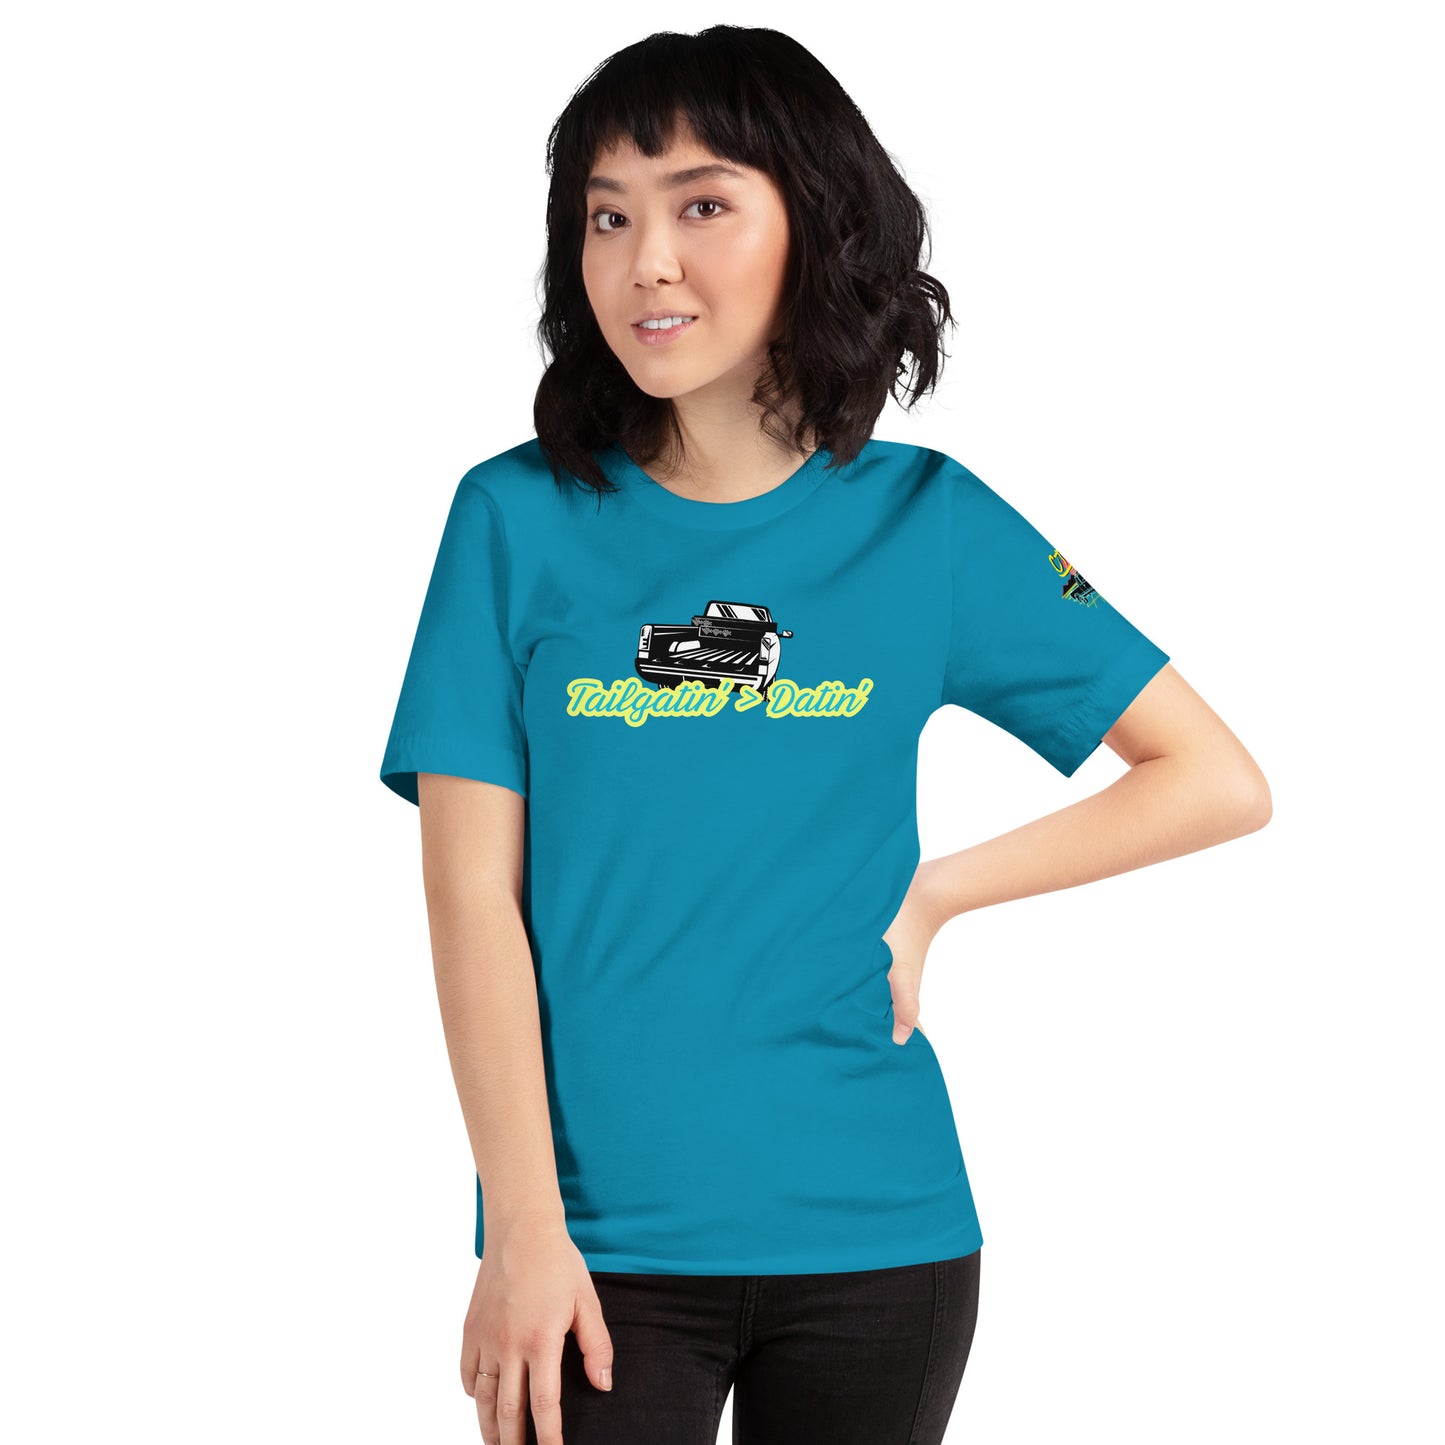 Tailgatin' > Datin' Unisex Soft T-shirt